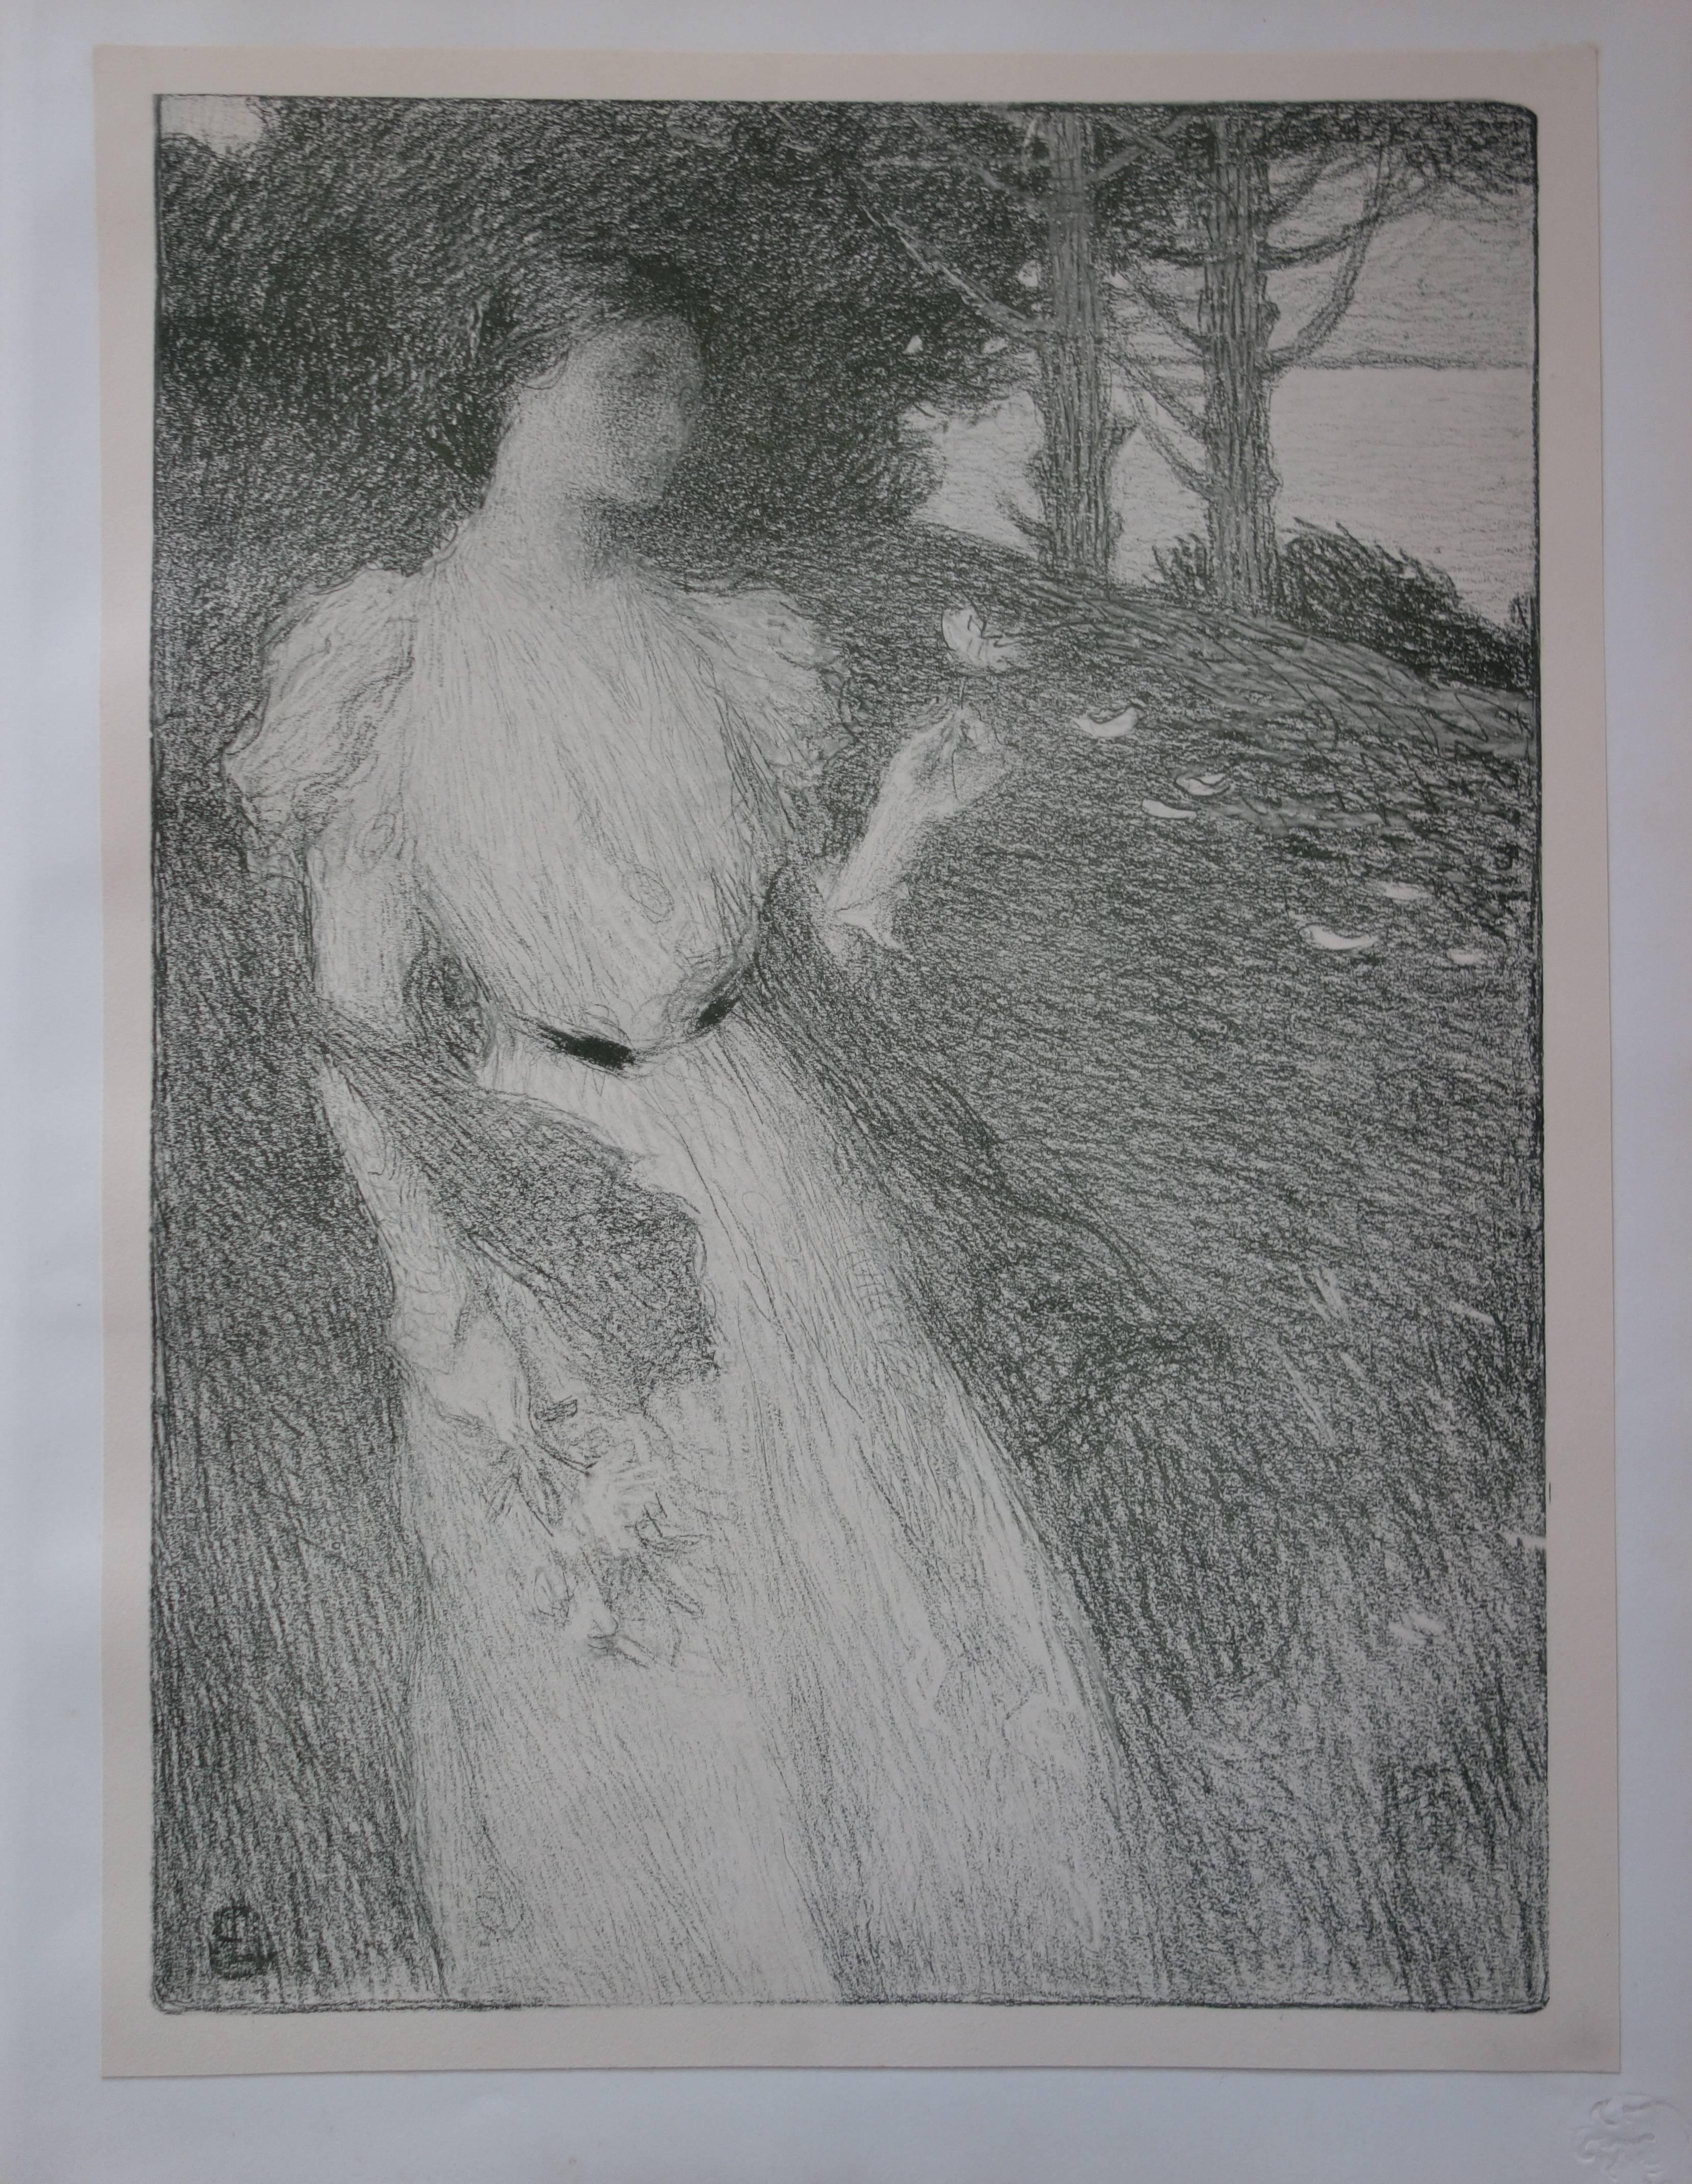 Soir d'octobre - original lithograph (1897/98)